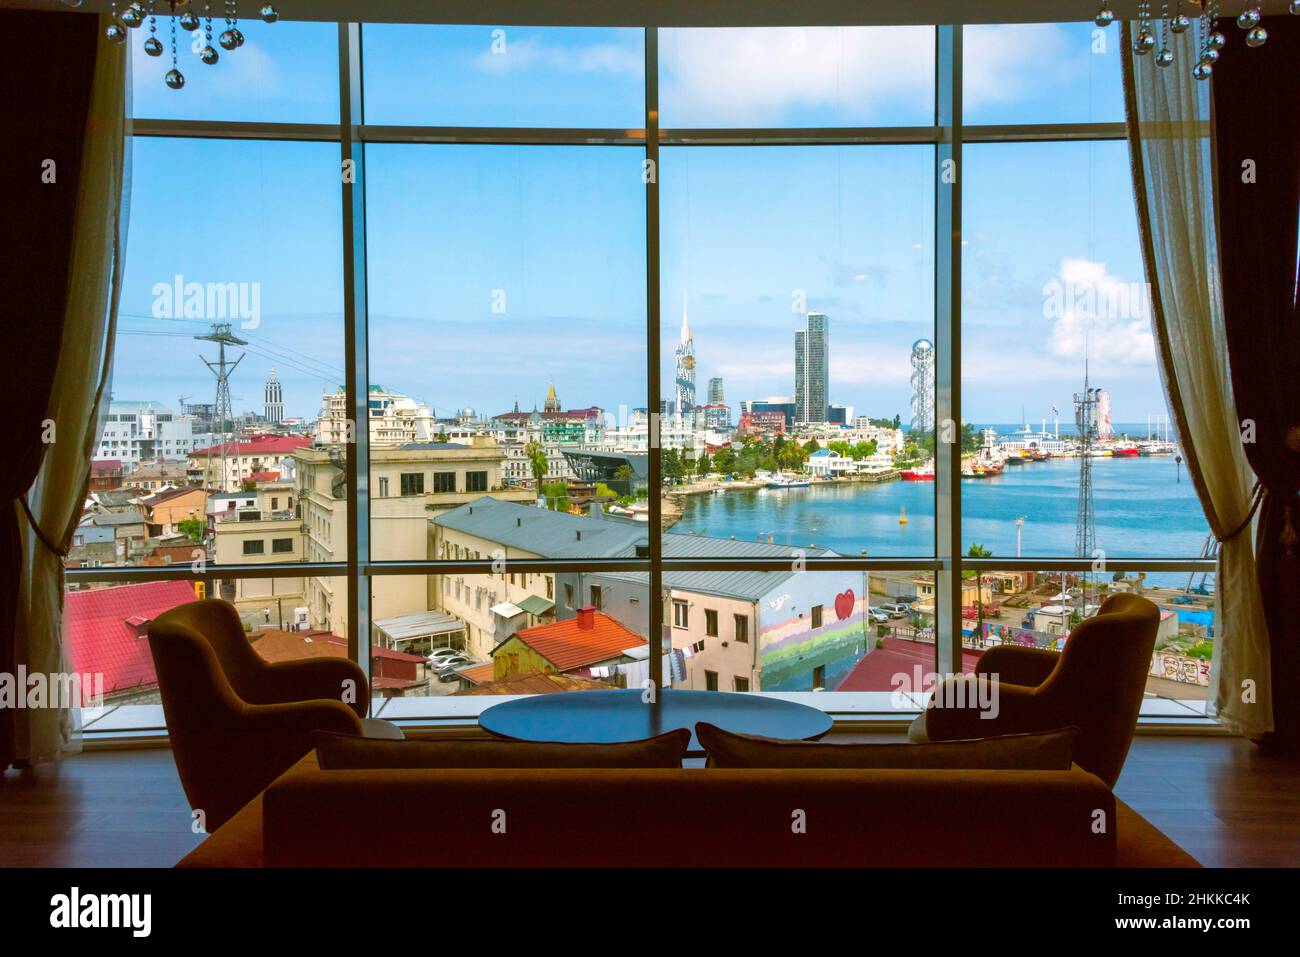 View of cityscape along the coast of the Caspian Sea through windows, Batumi Technological University Tower with a ferris wheel built into the facade, Stock Photo